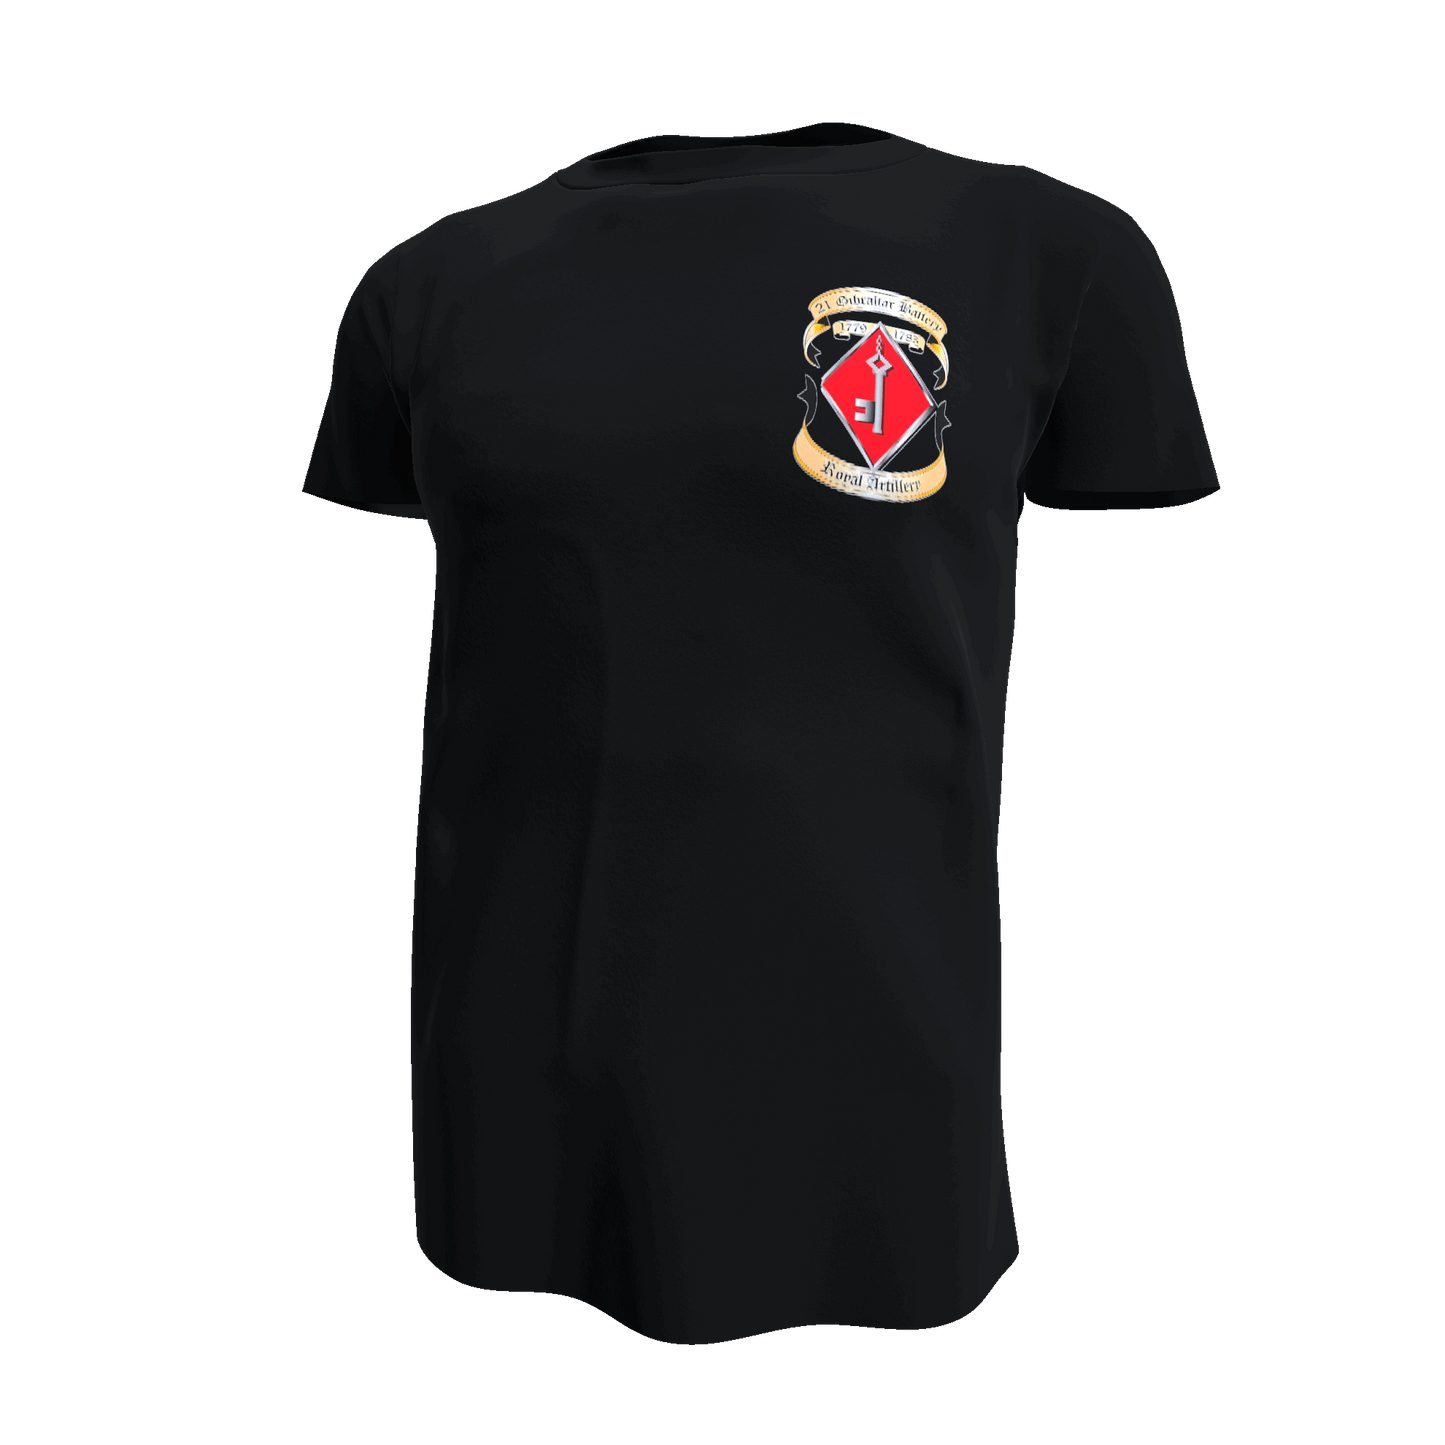 21 Battery T Shirt - Army 1157 kit S / Black 50 Missile Regiment RA